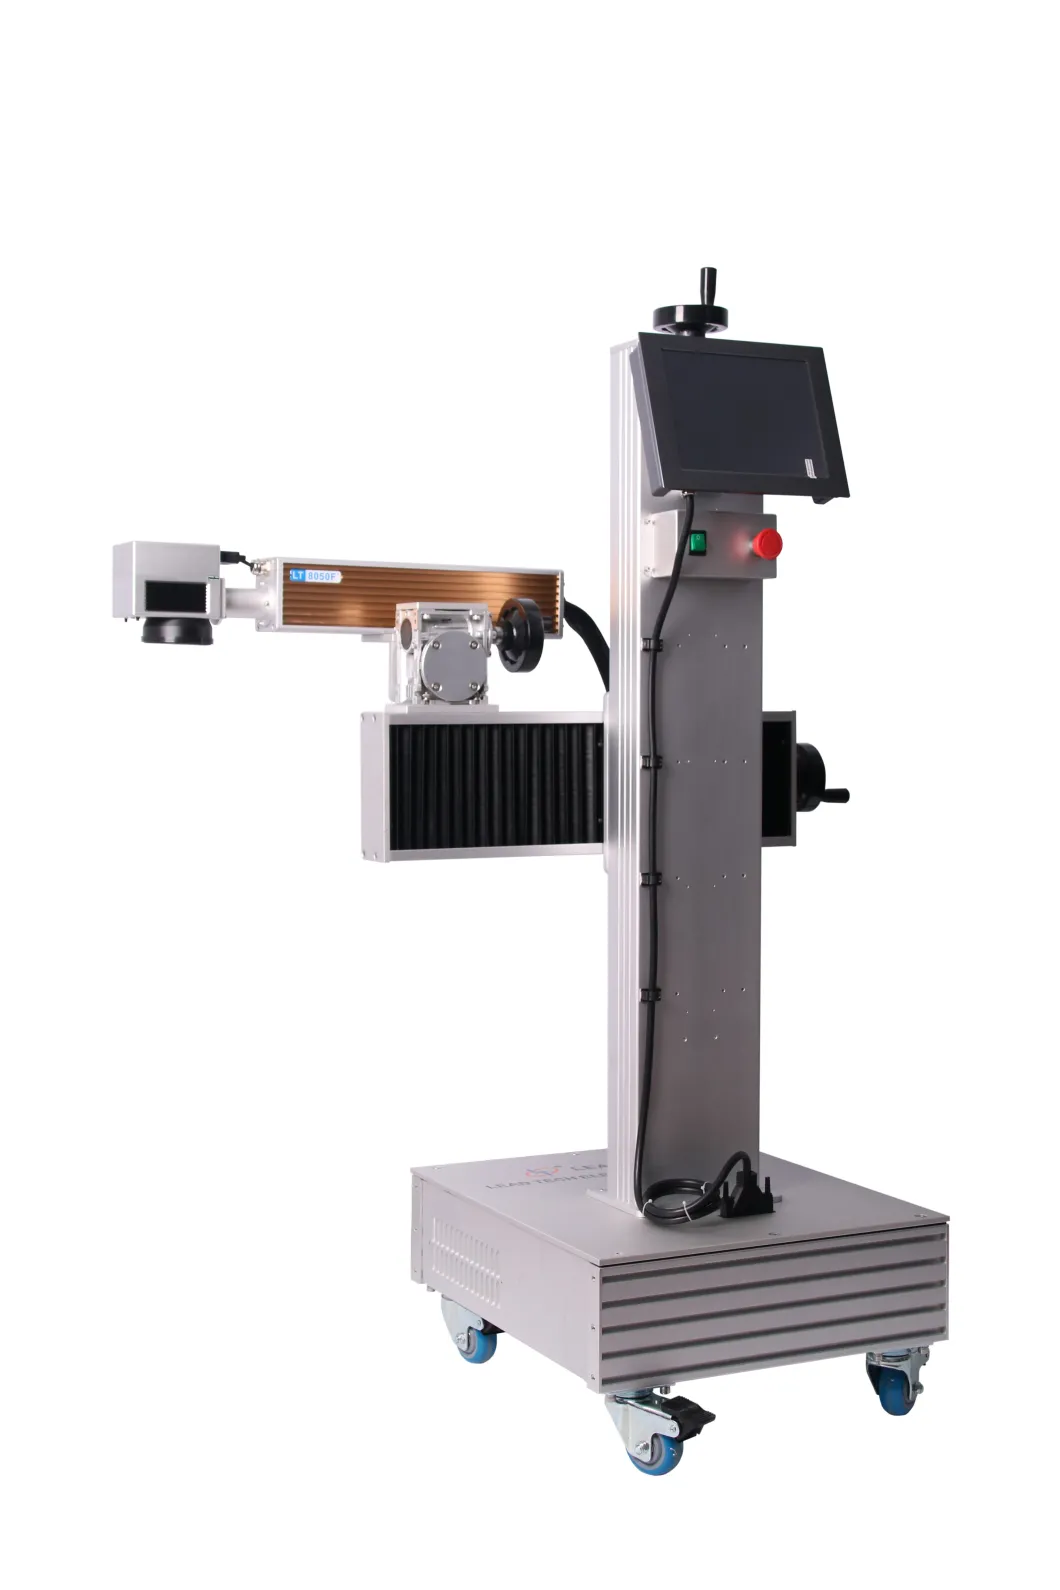 Lt8020f/Lt8030f/Lt8050f Stainless Steel Fiber Laser 3D Printer Marking Machine for Metal